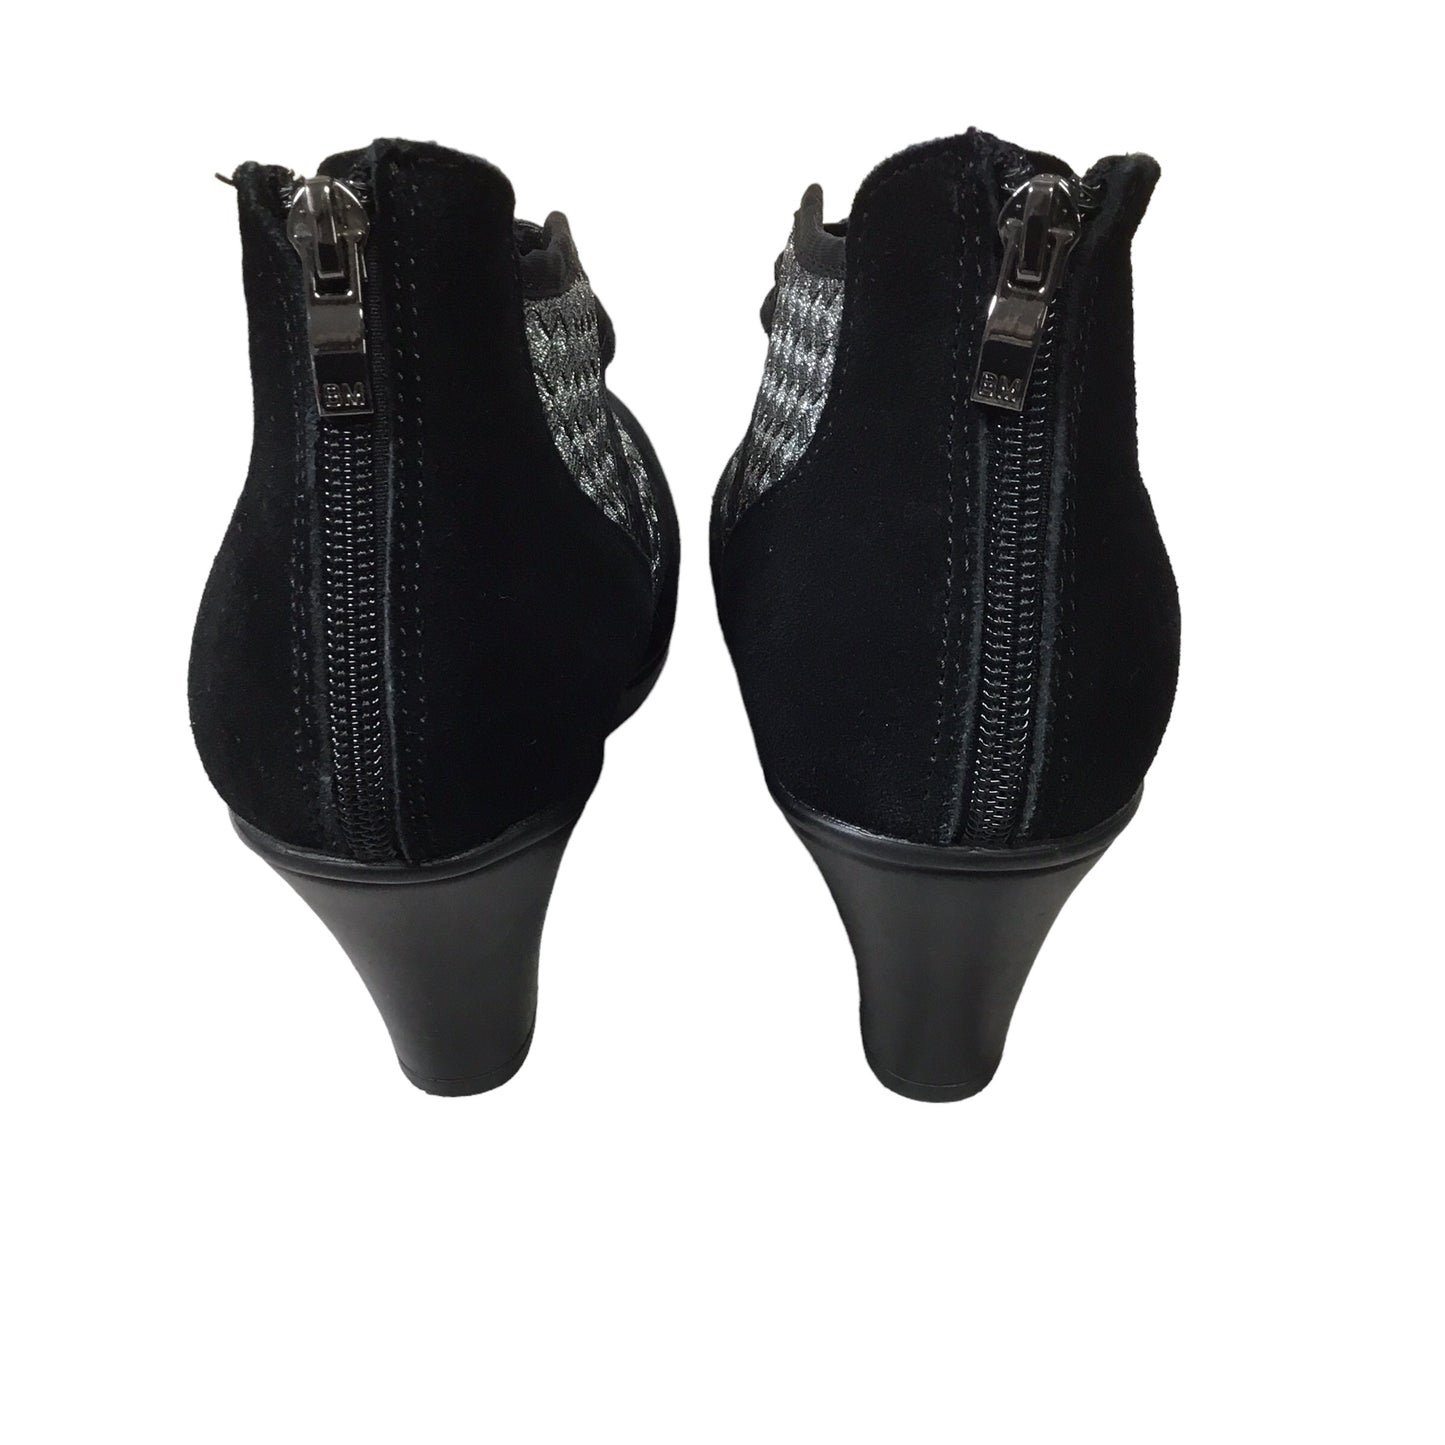 Black & Silver Shoes Heels Block Bernie Mev, Size 6.5